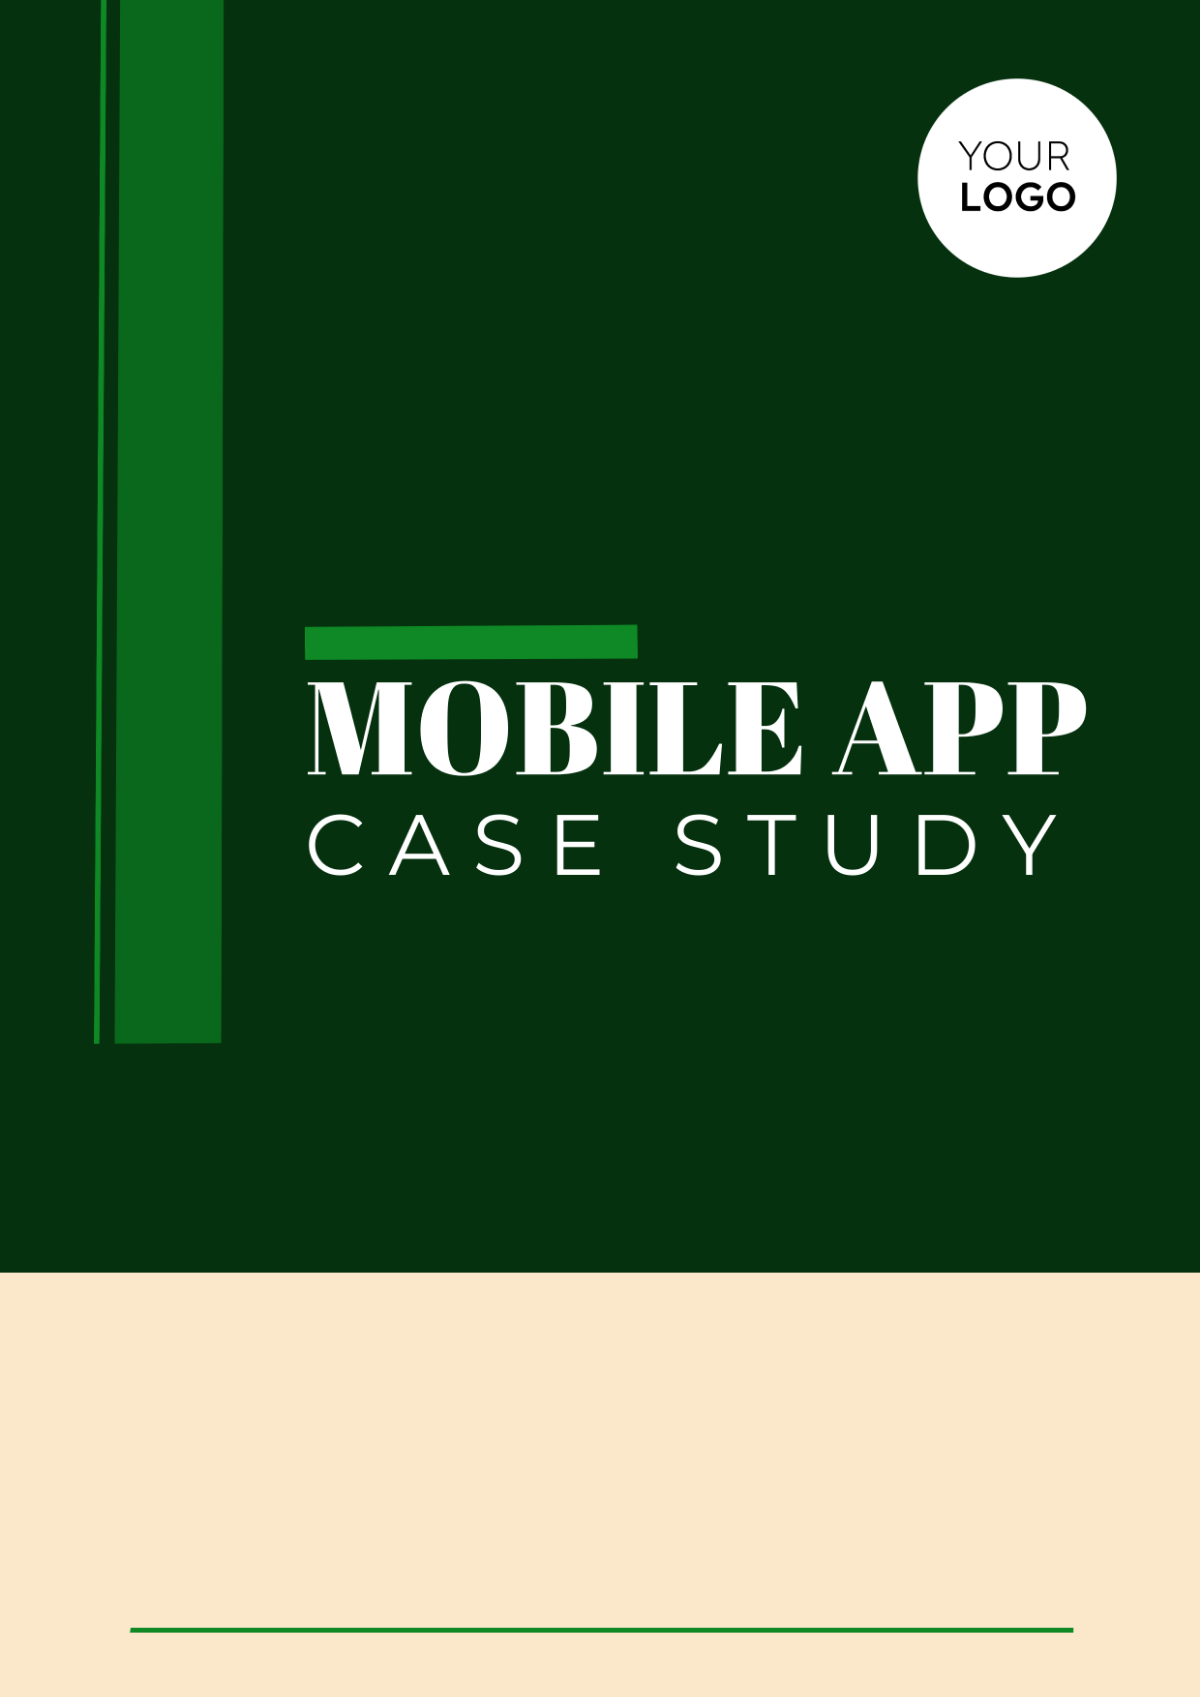 Mobile App Case Study Template